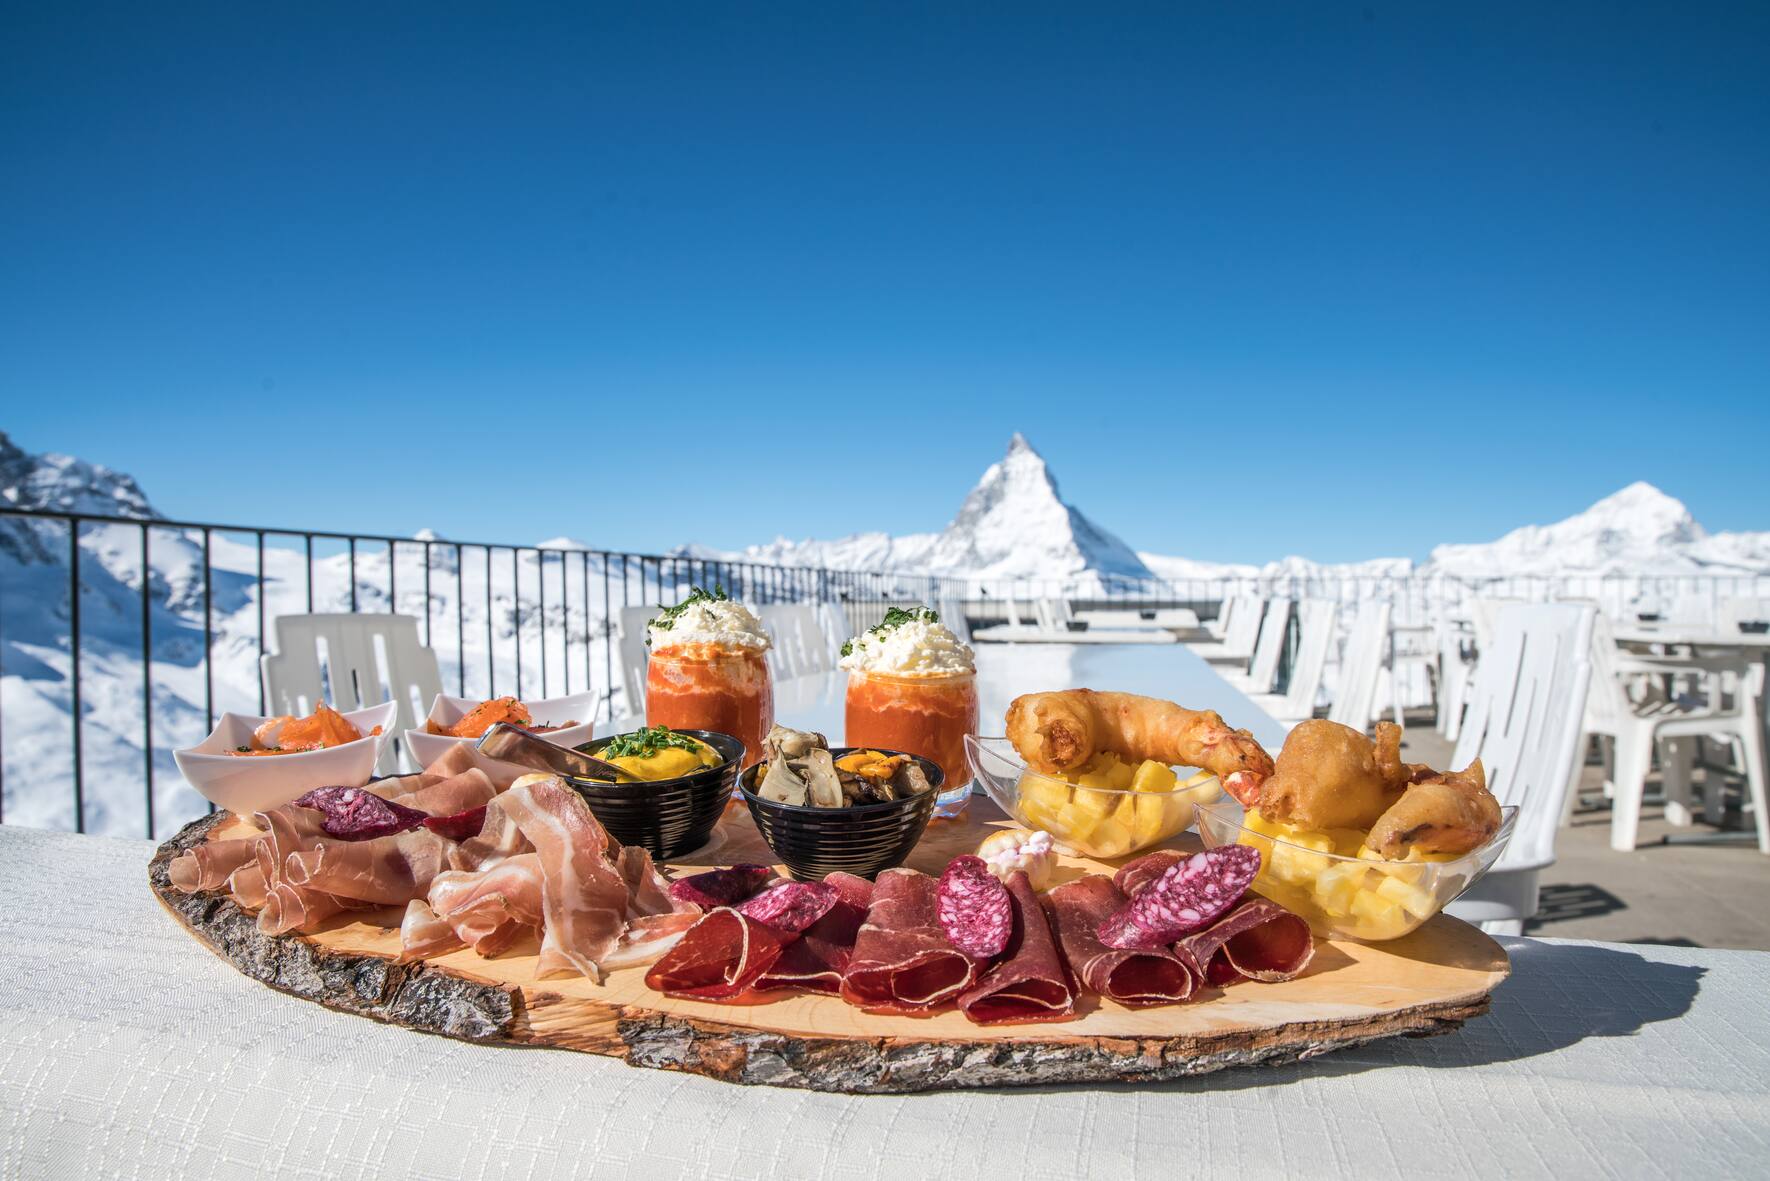 Cucchiaio da cucina in legno  Souvenir di Zermatt Bergbahnen